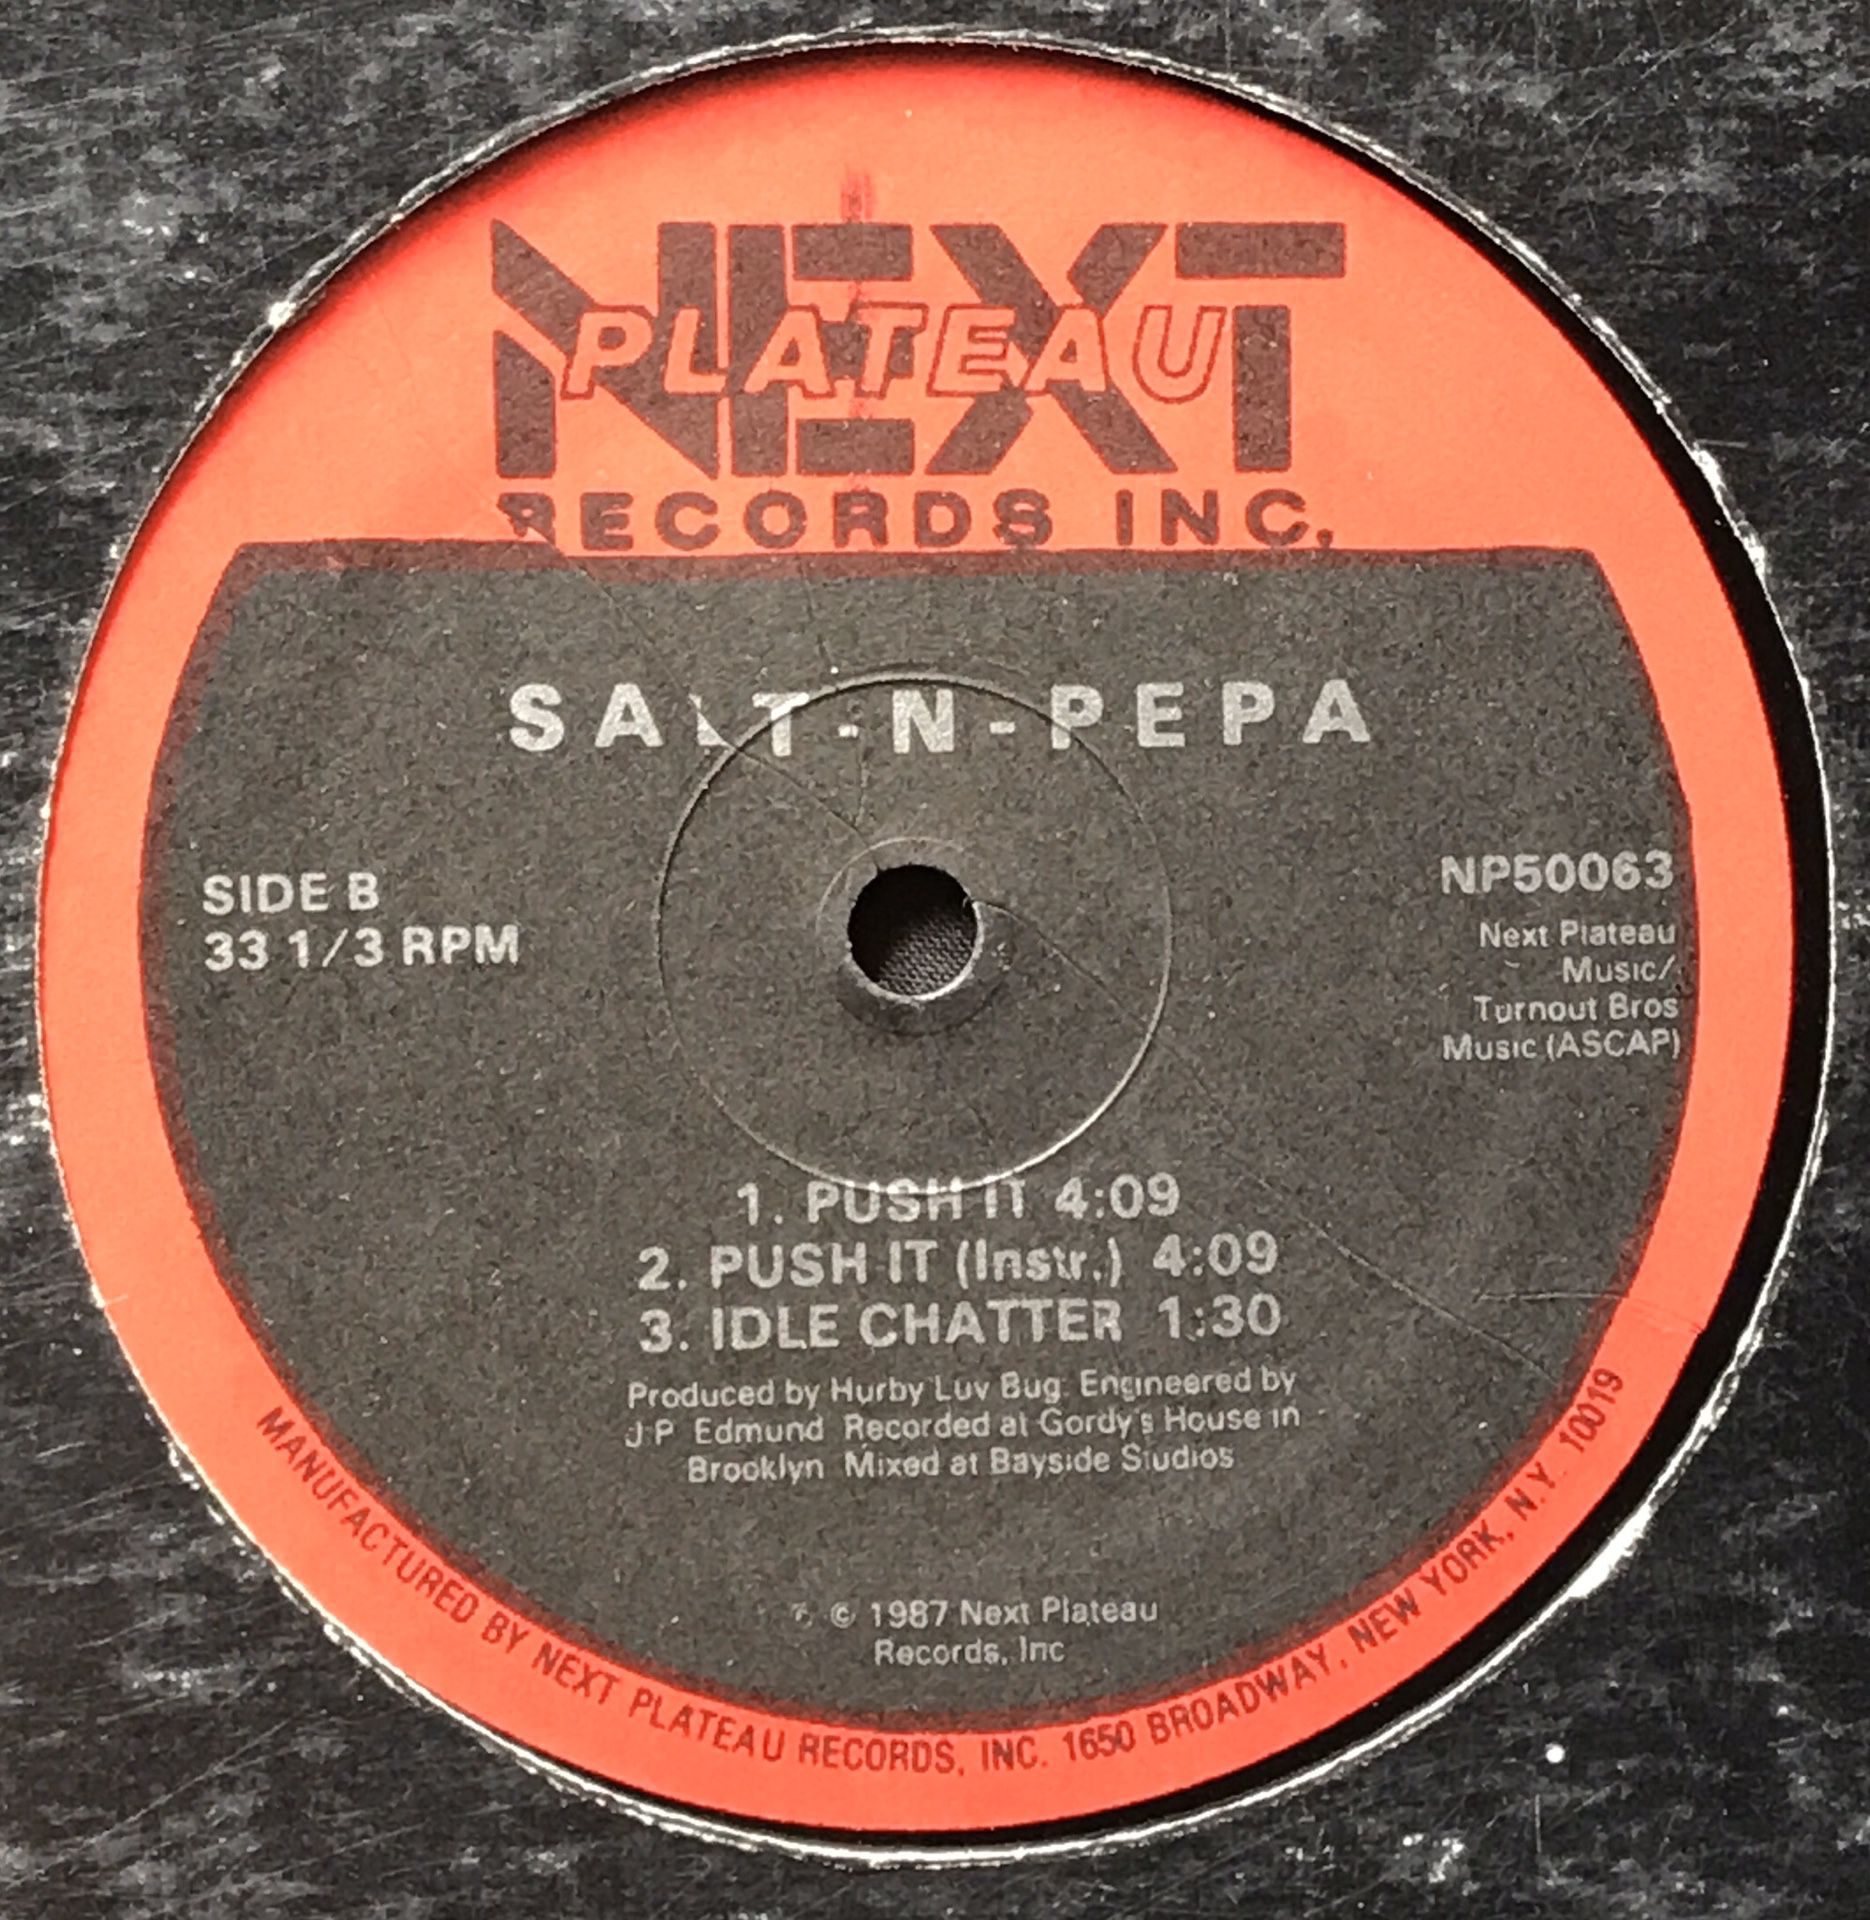 Salt 'N' Pepa - Push it - (12-inch Vinyl Record) Single